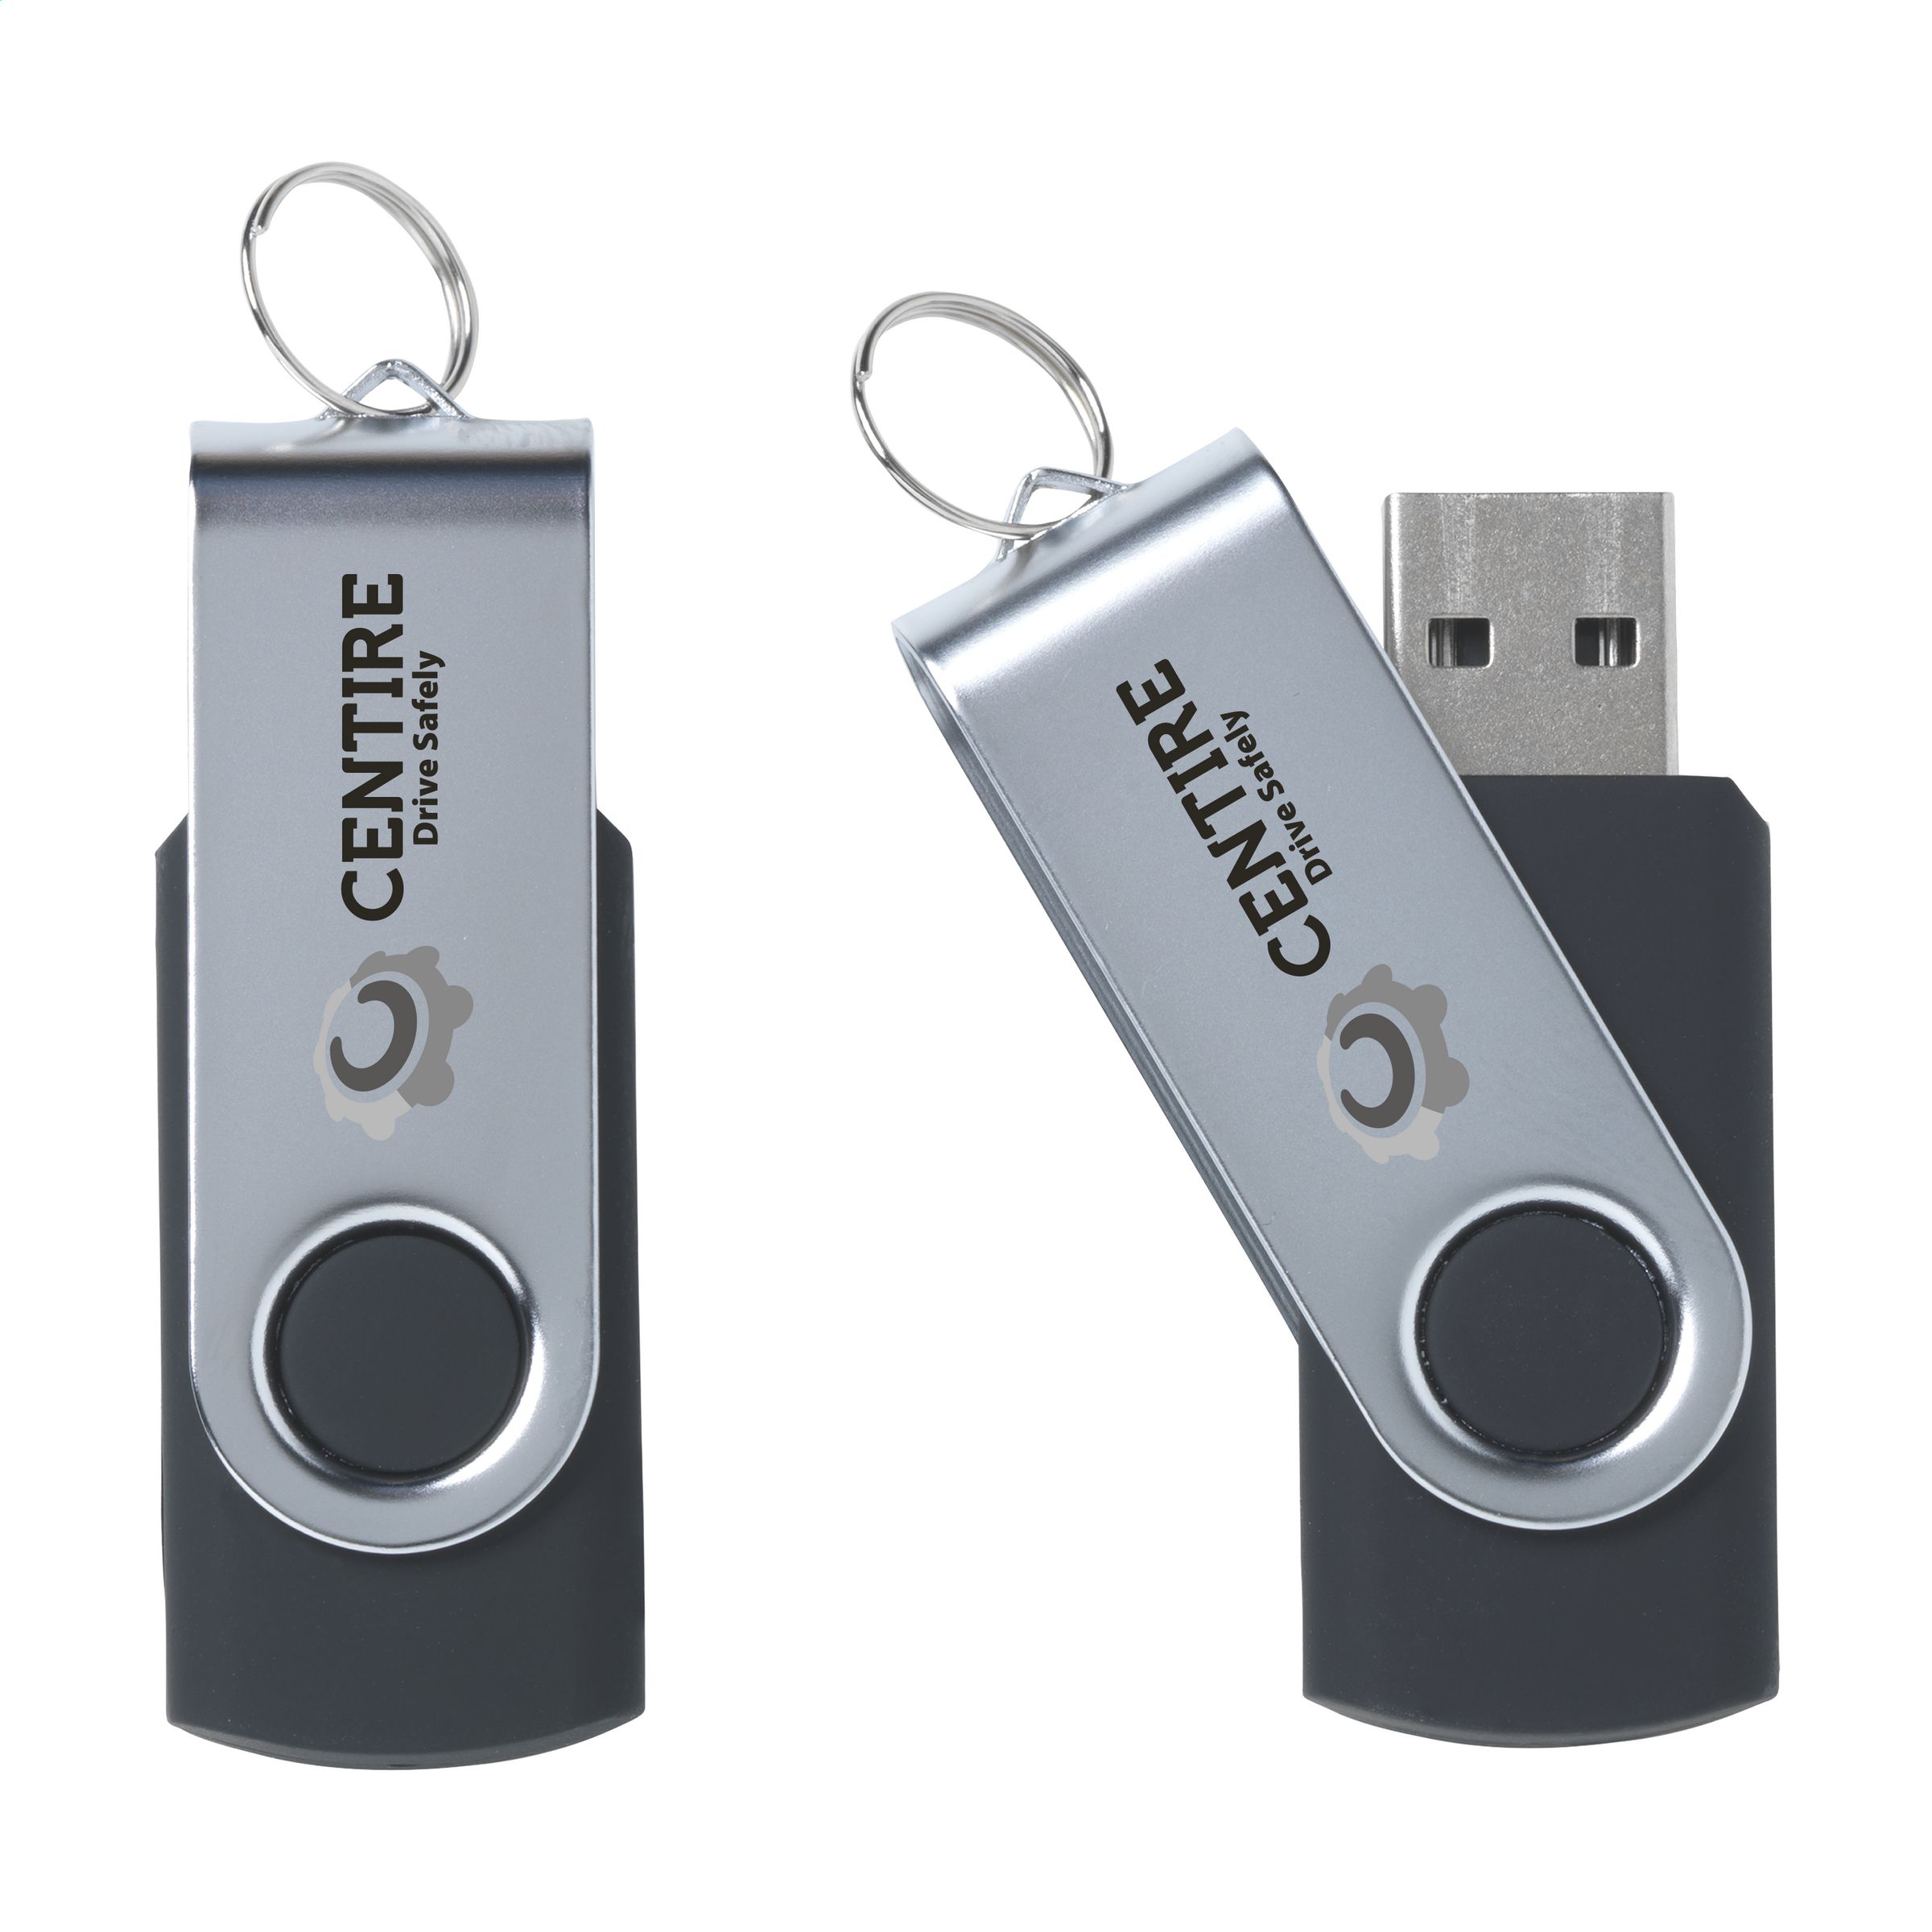 QuickStore USB - La Magdeleine - Zaprinta France